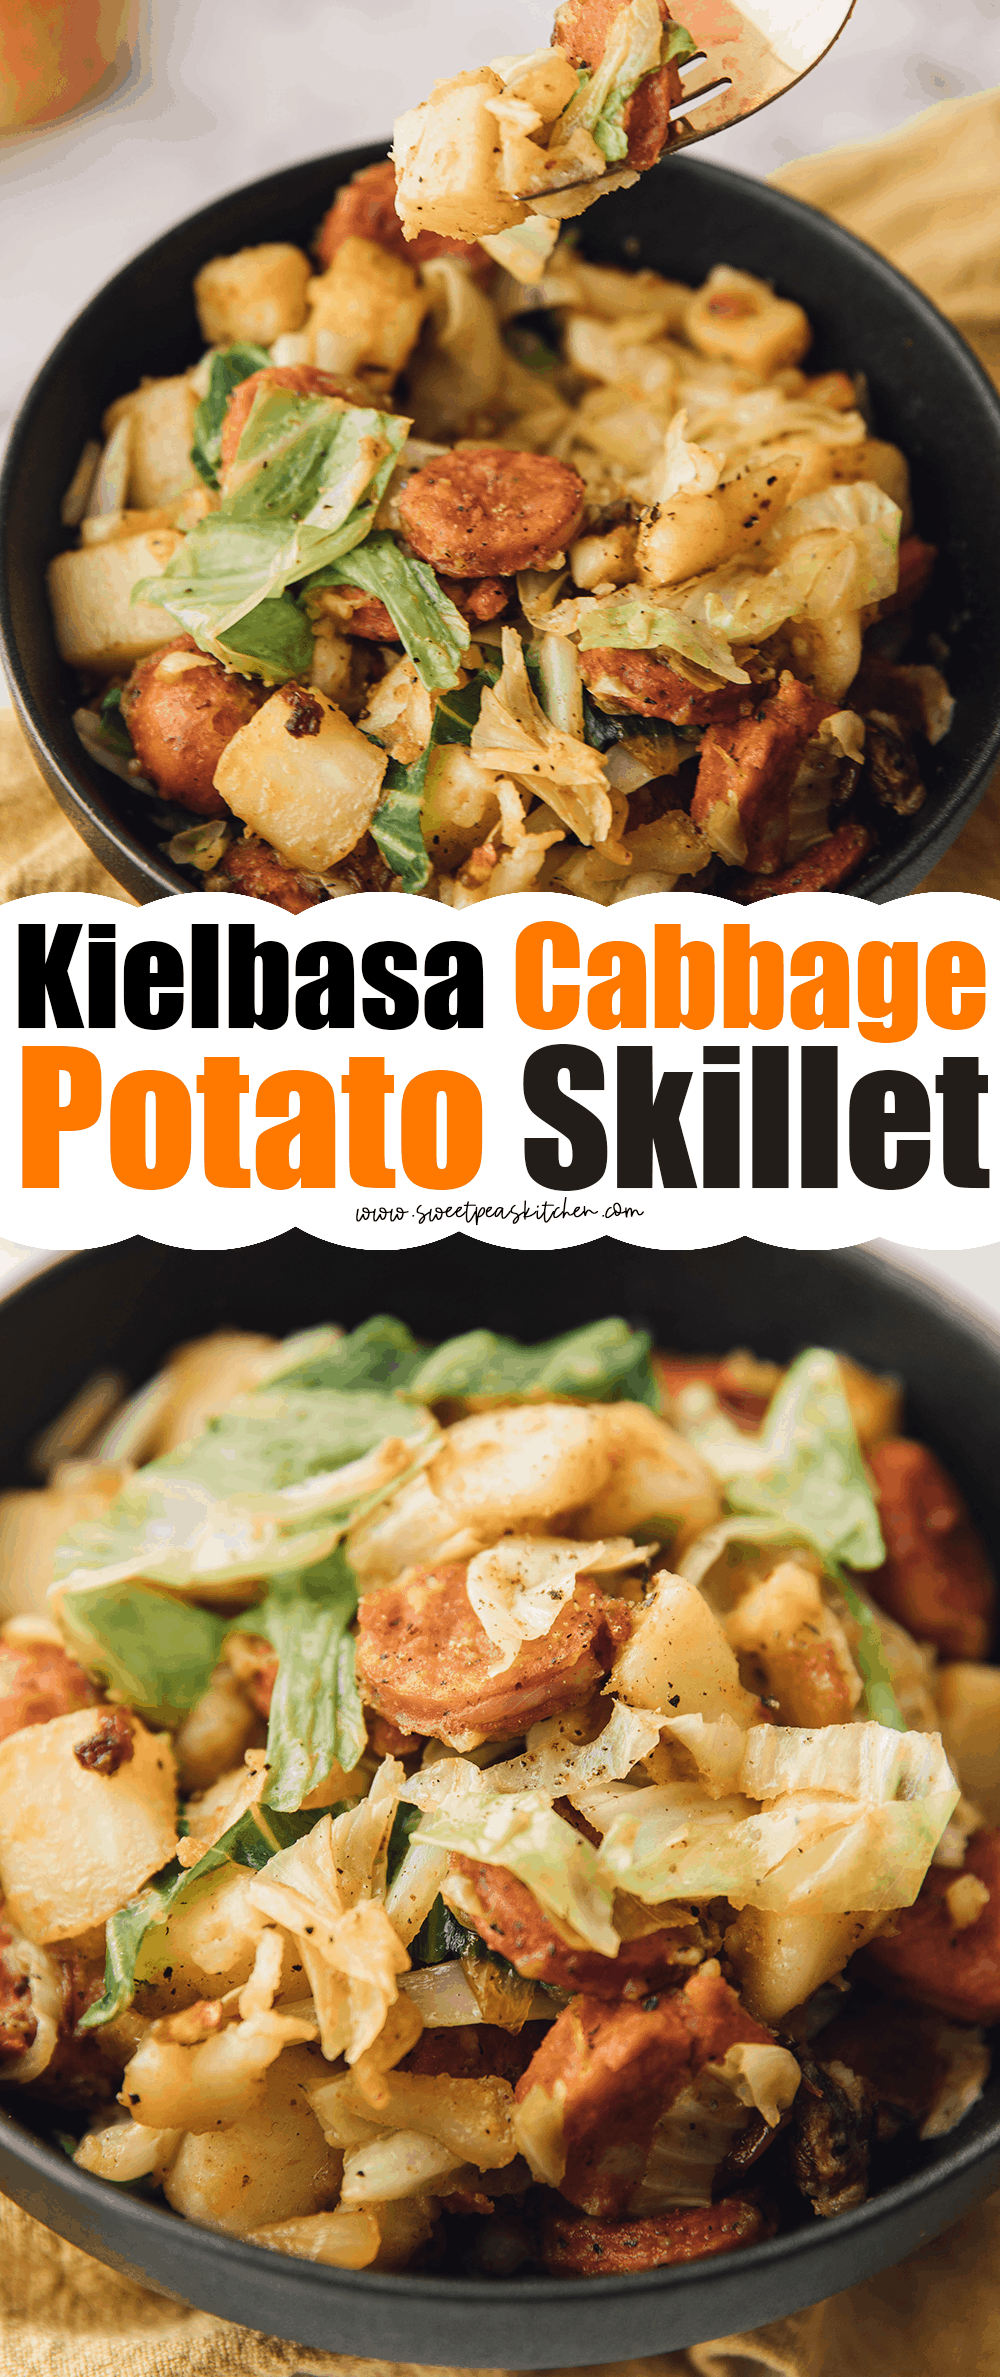 Kielbasa Cabbage Potato Skillet